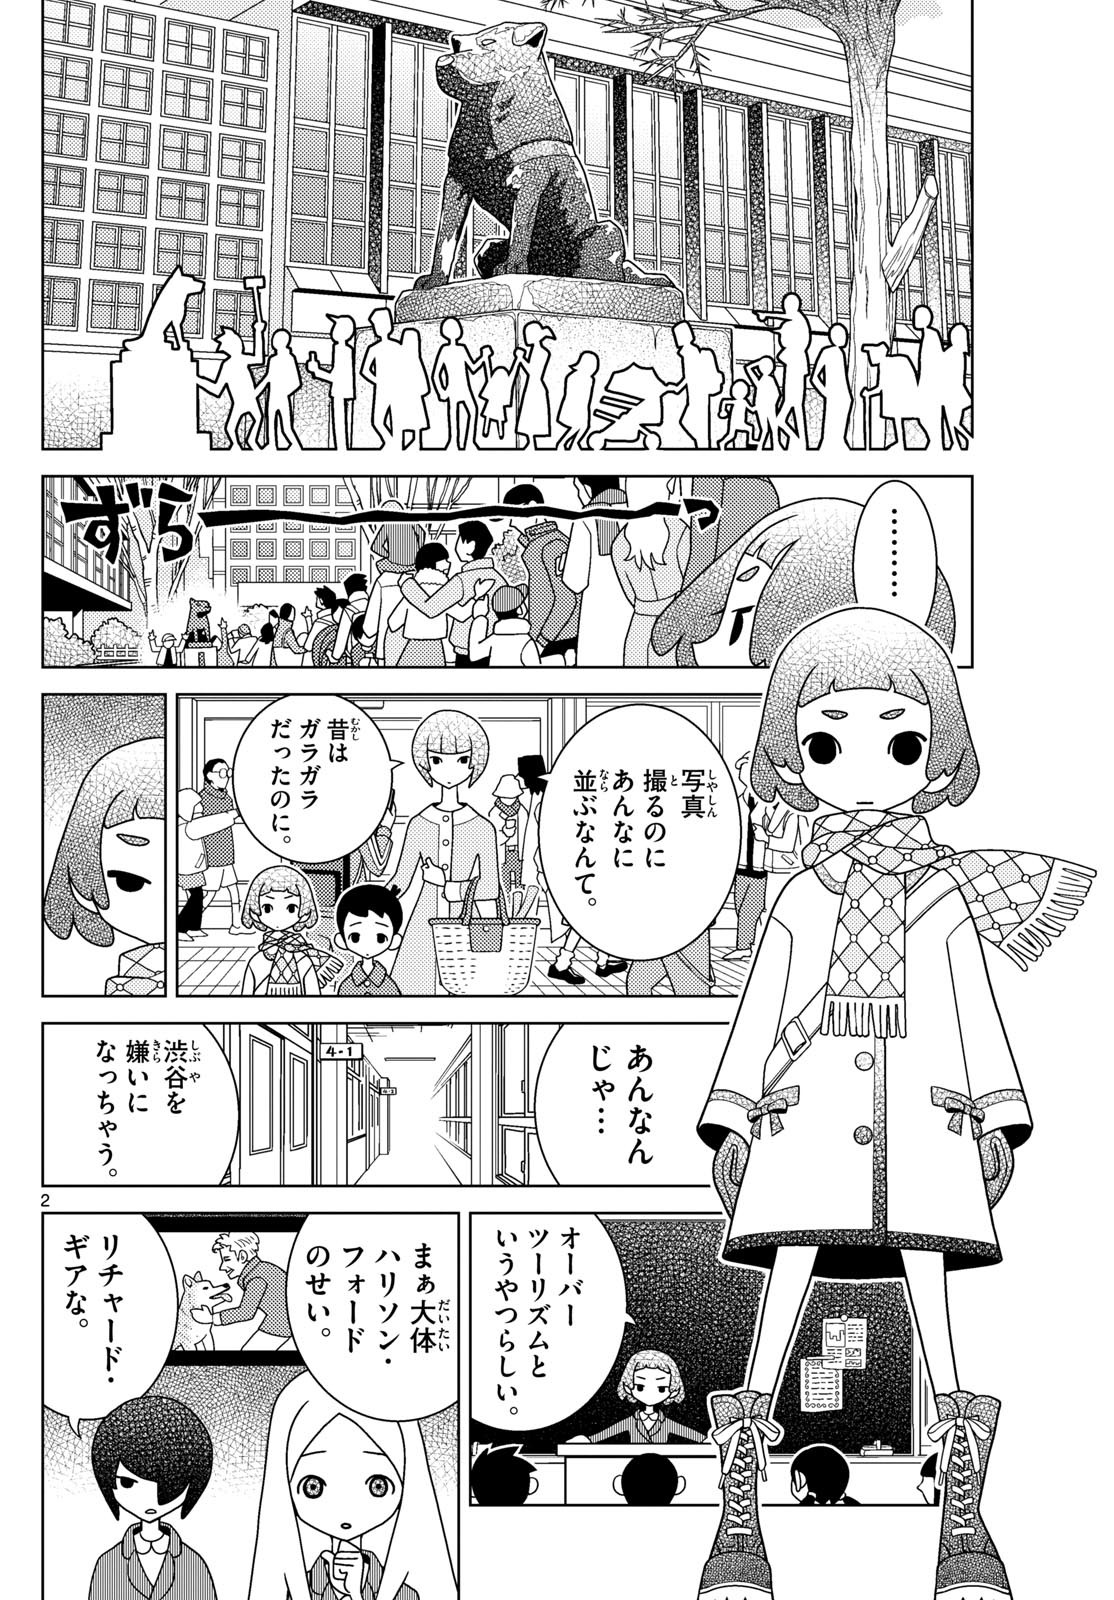 Shibuya Near Family - Chapter 087 - Page 2